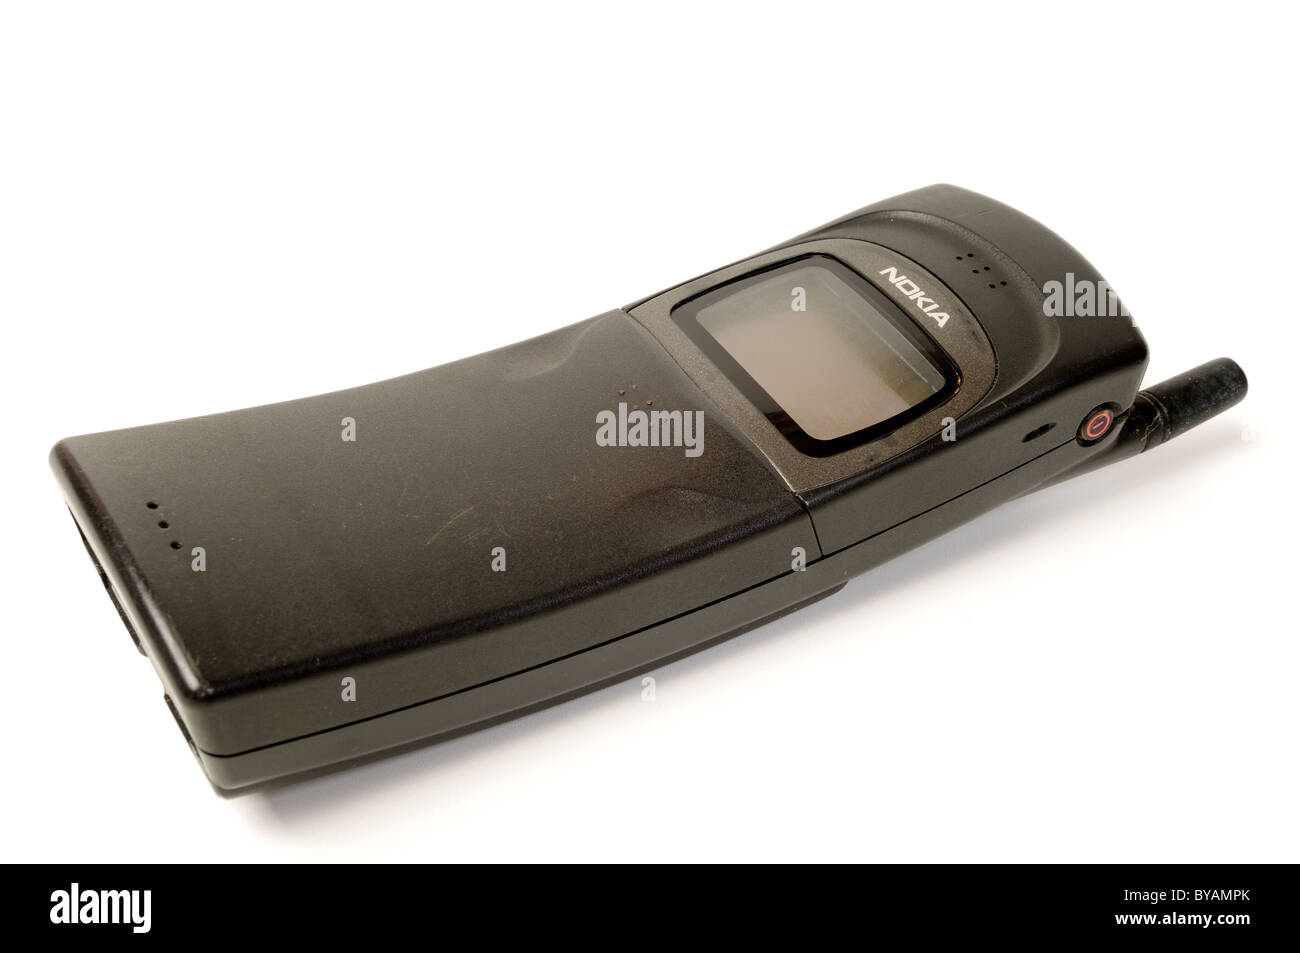 Nokia 8110 banana phone -Fotos und -Bildmaterial in hoher Auflösung – Alamy